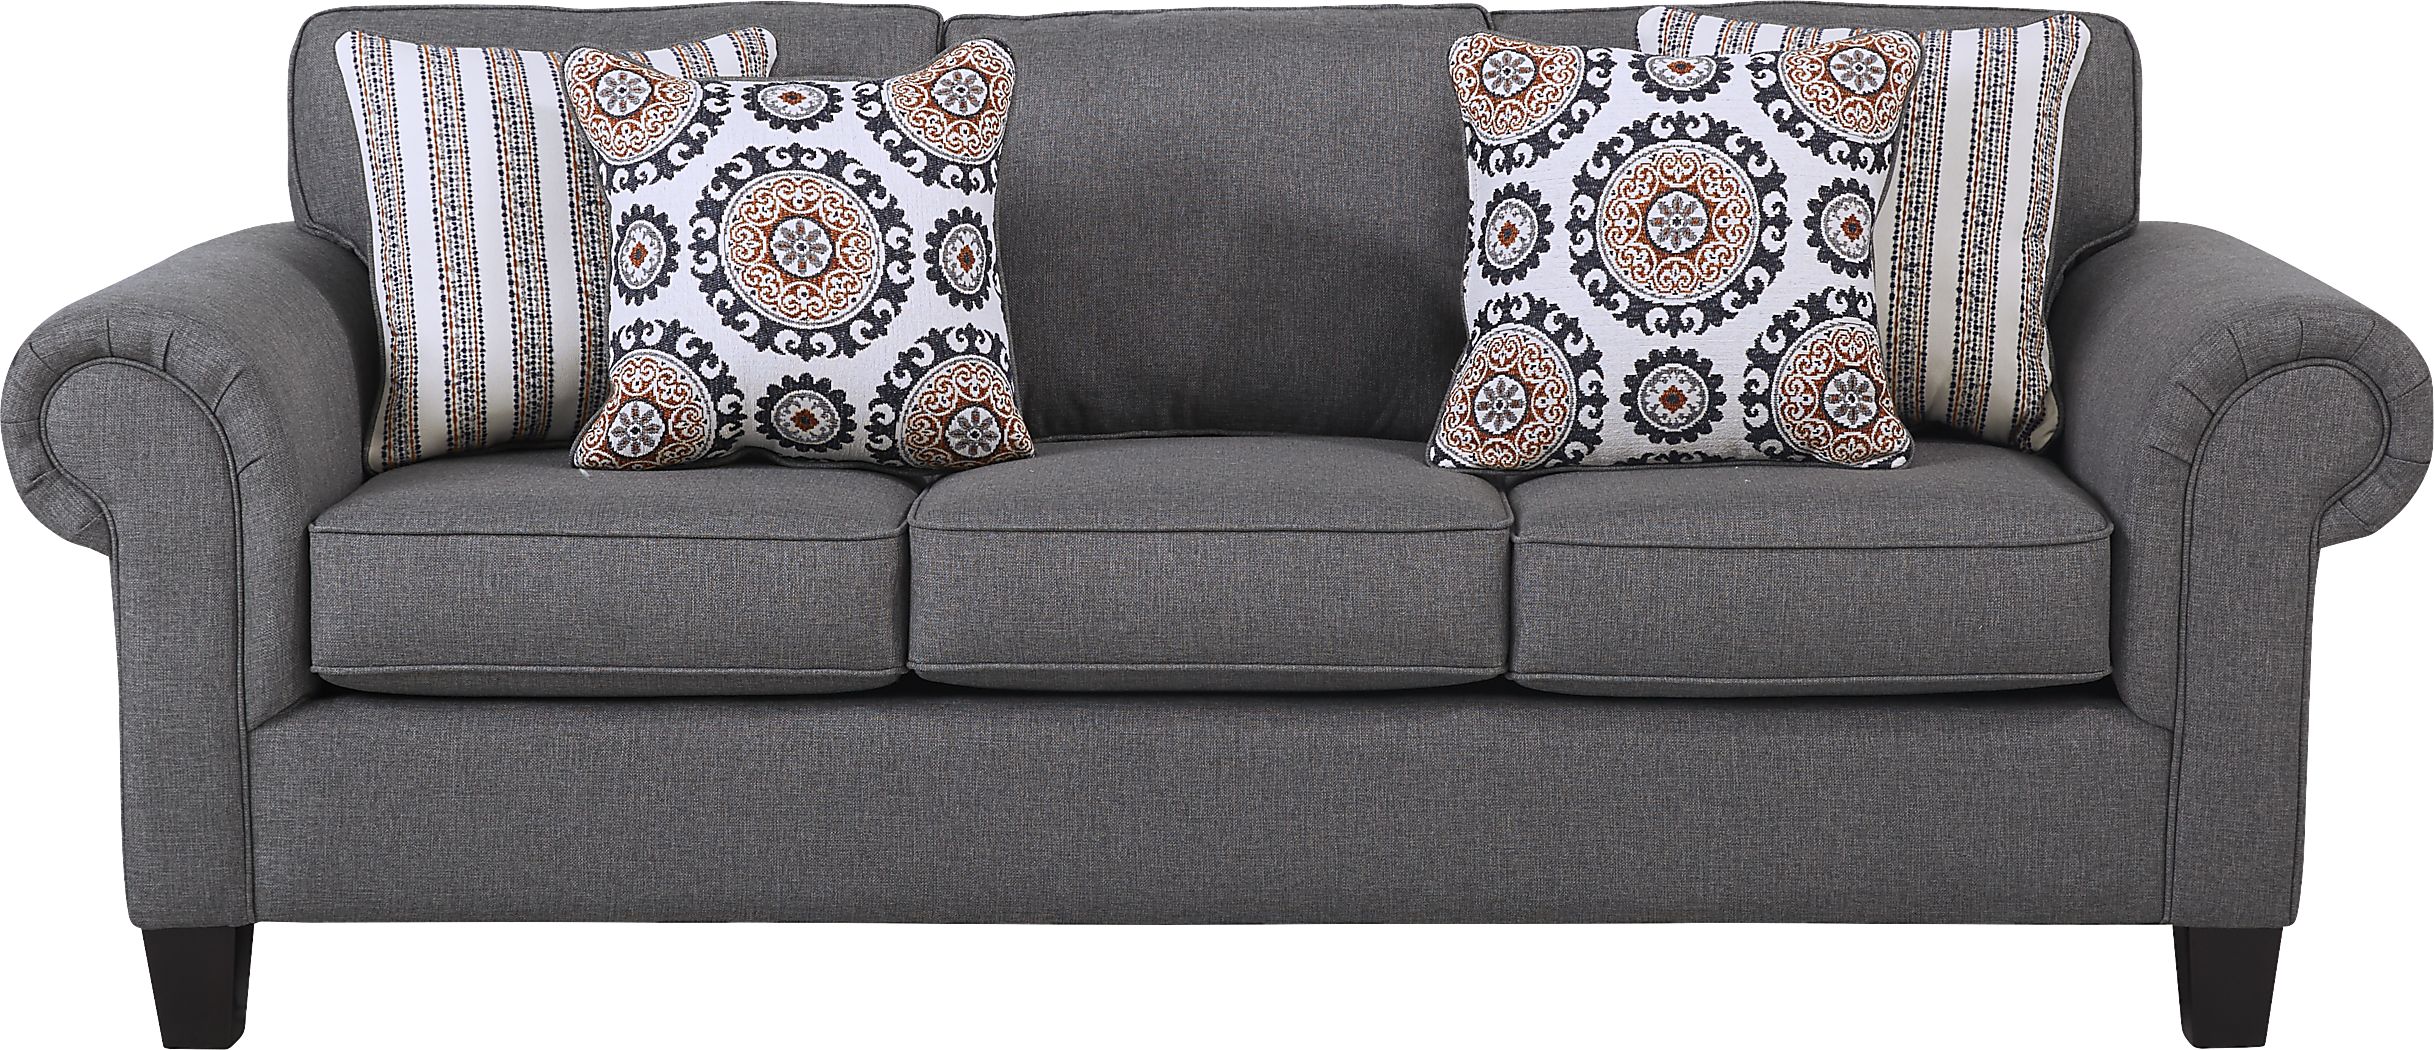 Oakhurst Gray 7 Pc Living Room with Sleeper Sofa